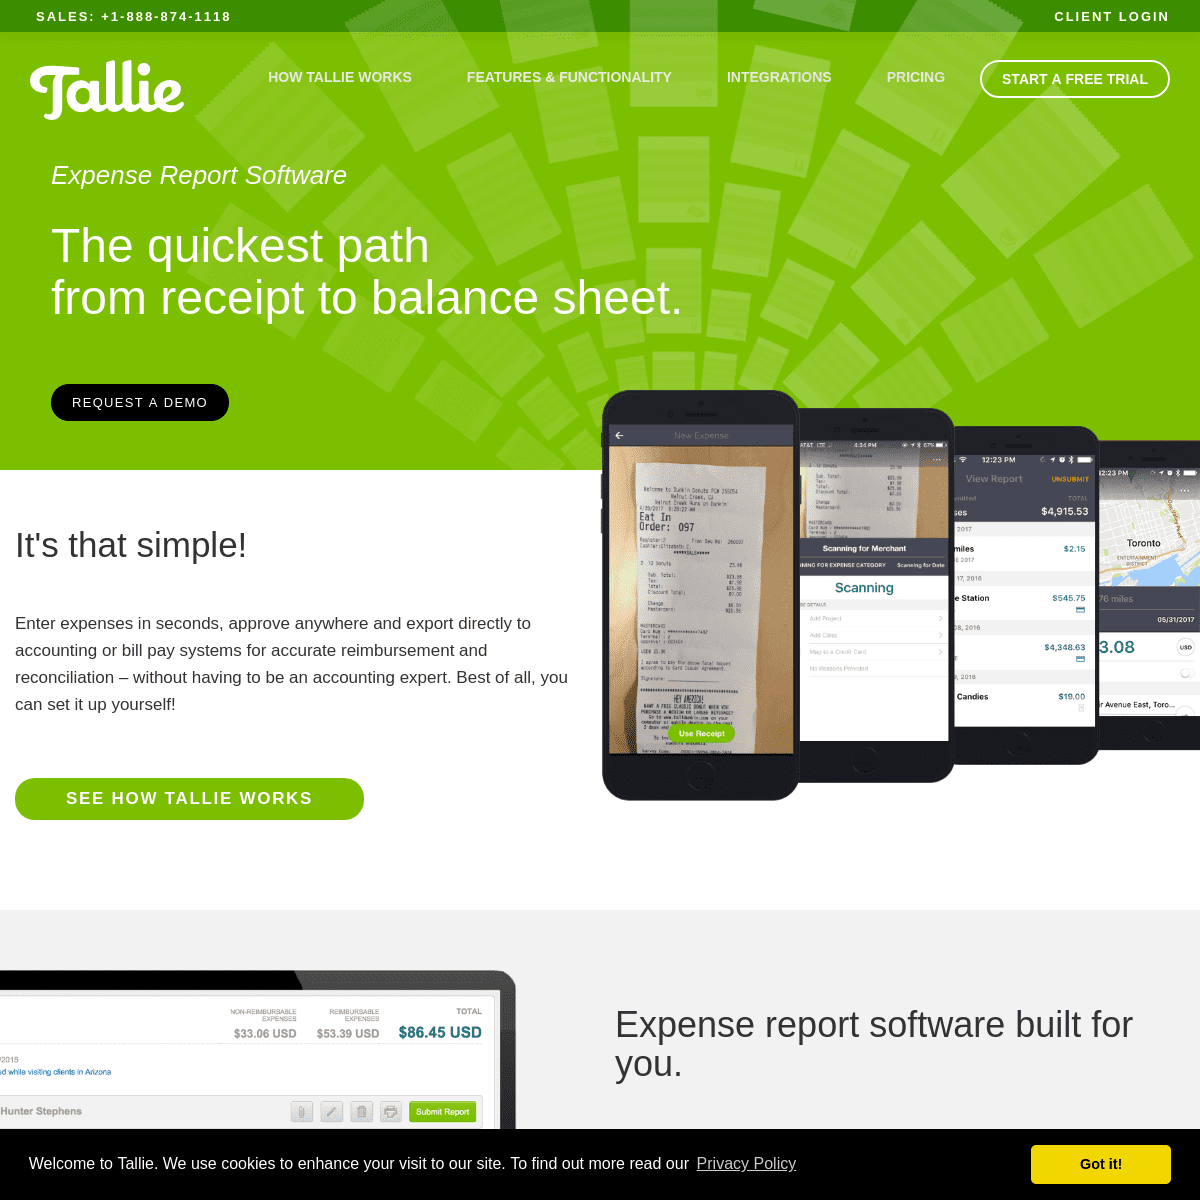 A complete backup of usetallie.com